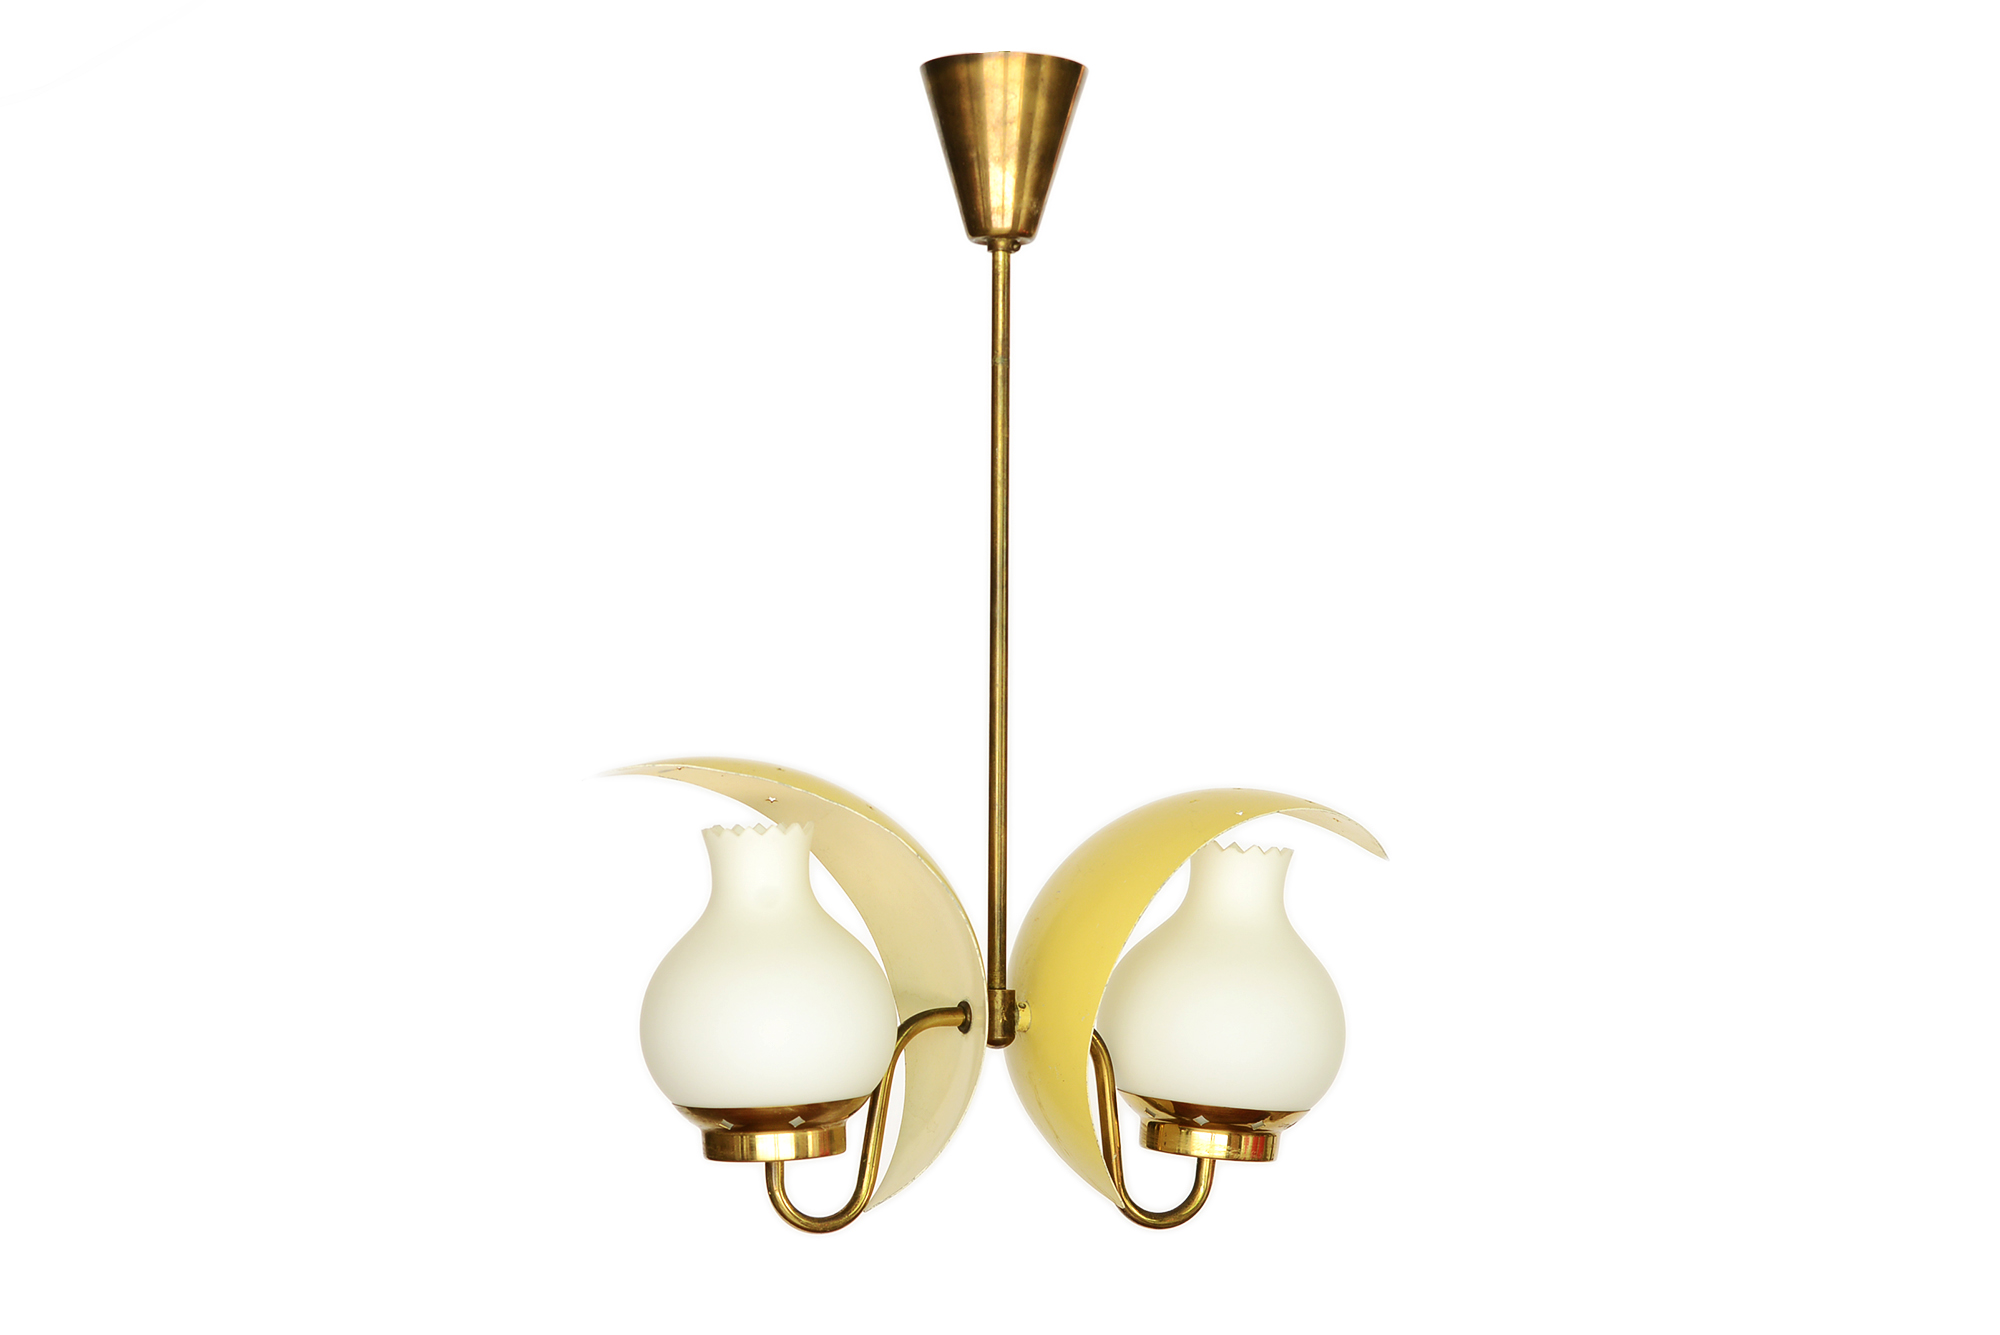 Double pendant light/chandelier by Bent Karlby for Lyfa. Denmark 1950s